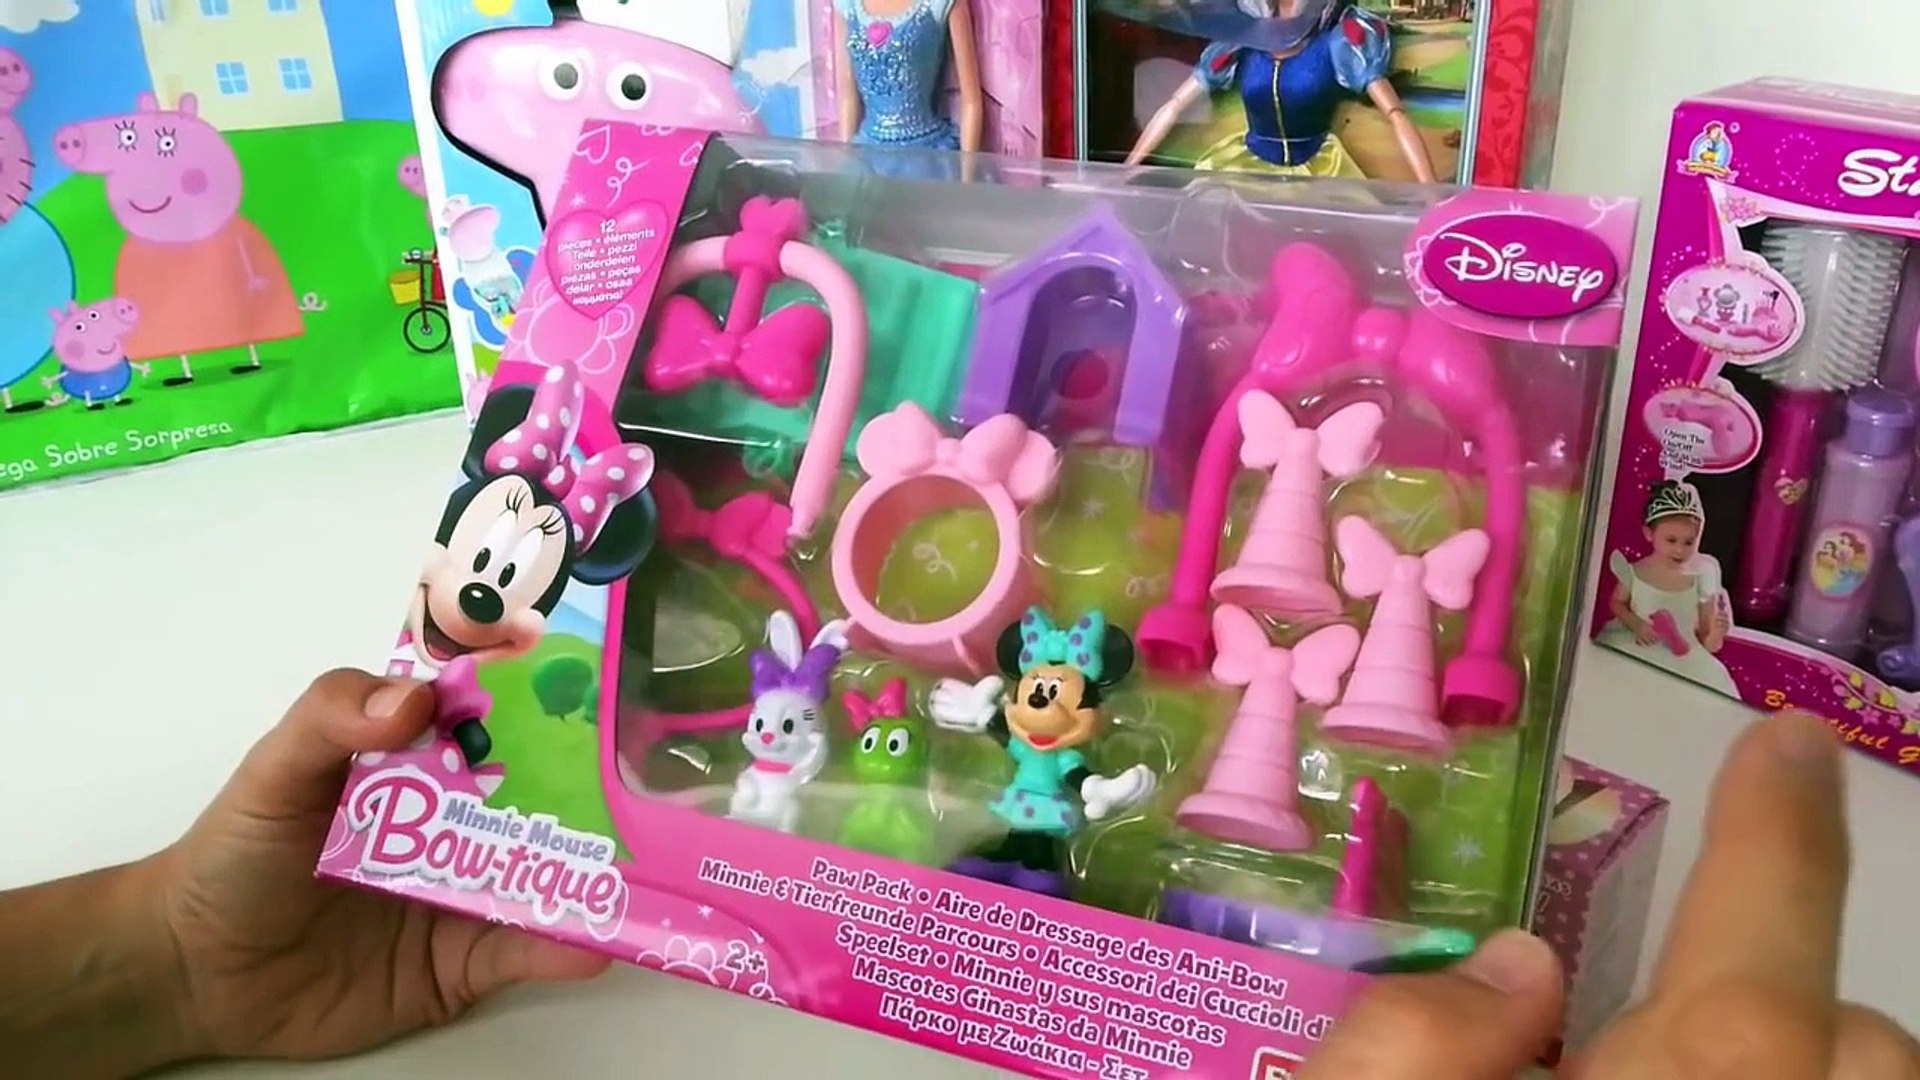 Juguetes de Minnie Mouse Bowtique | Juguetes para niñas - Dailymotion Video